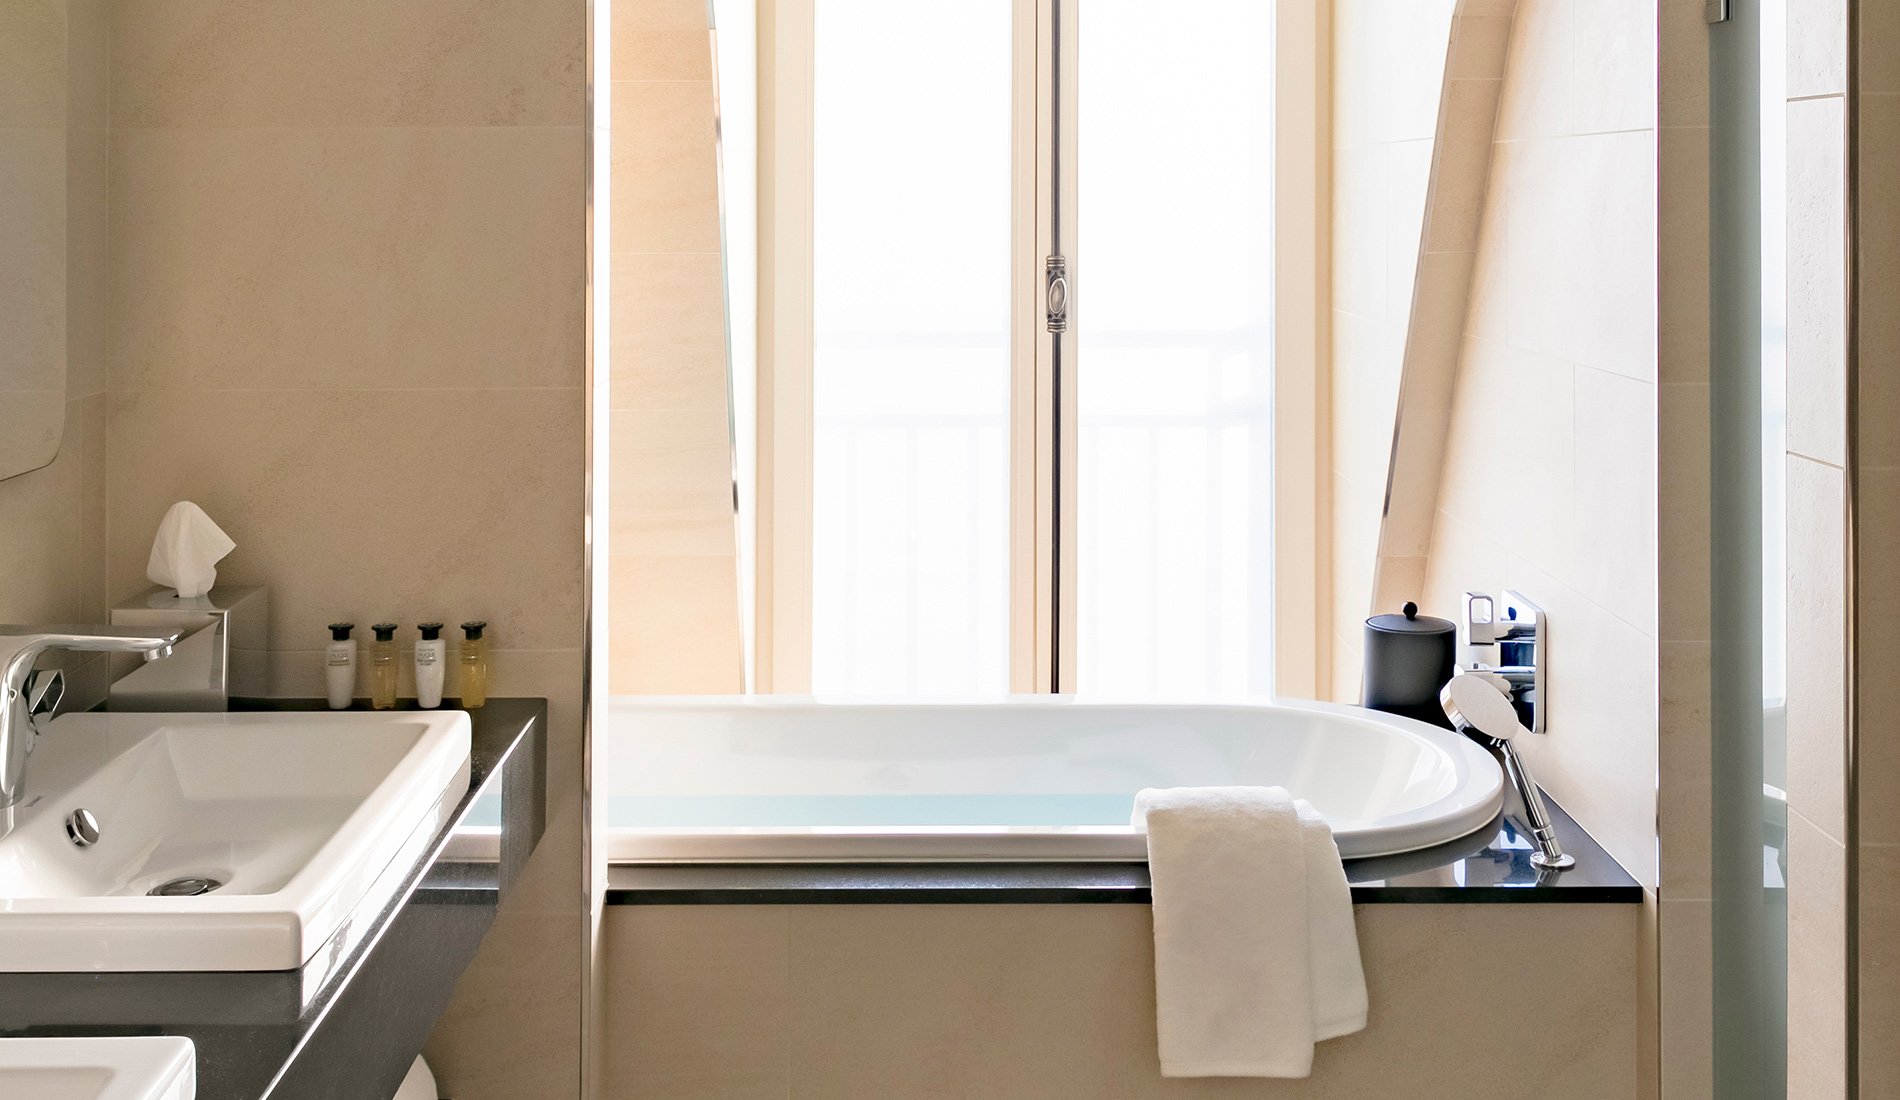 Luxury hotel - Maison Albar Hotels Le Pont-Neuf - 5-star - bathroom